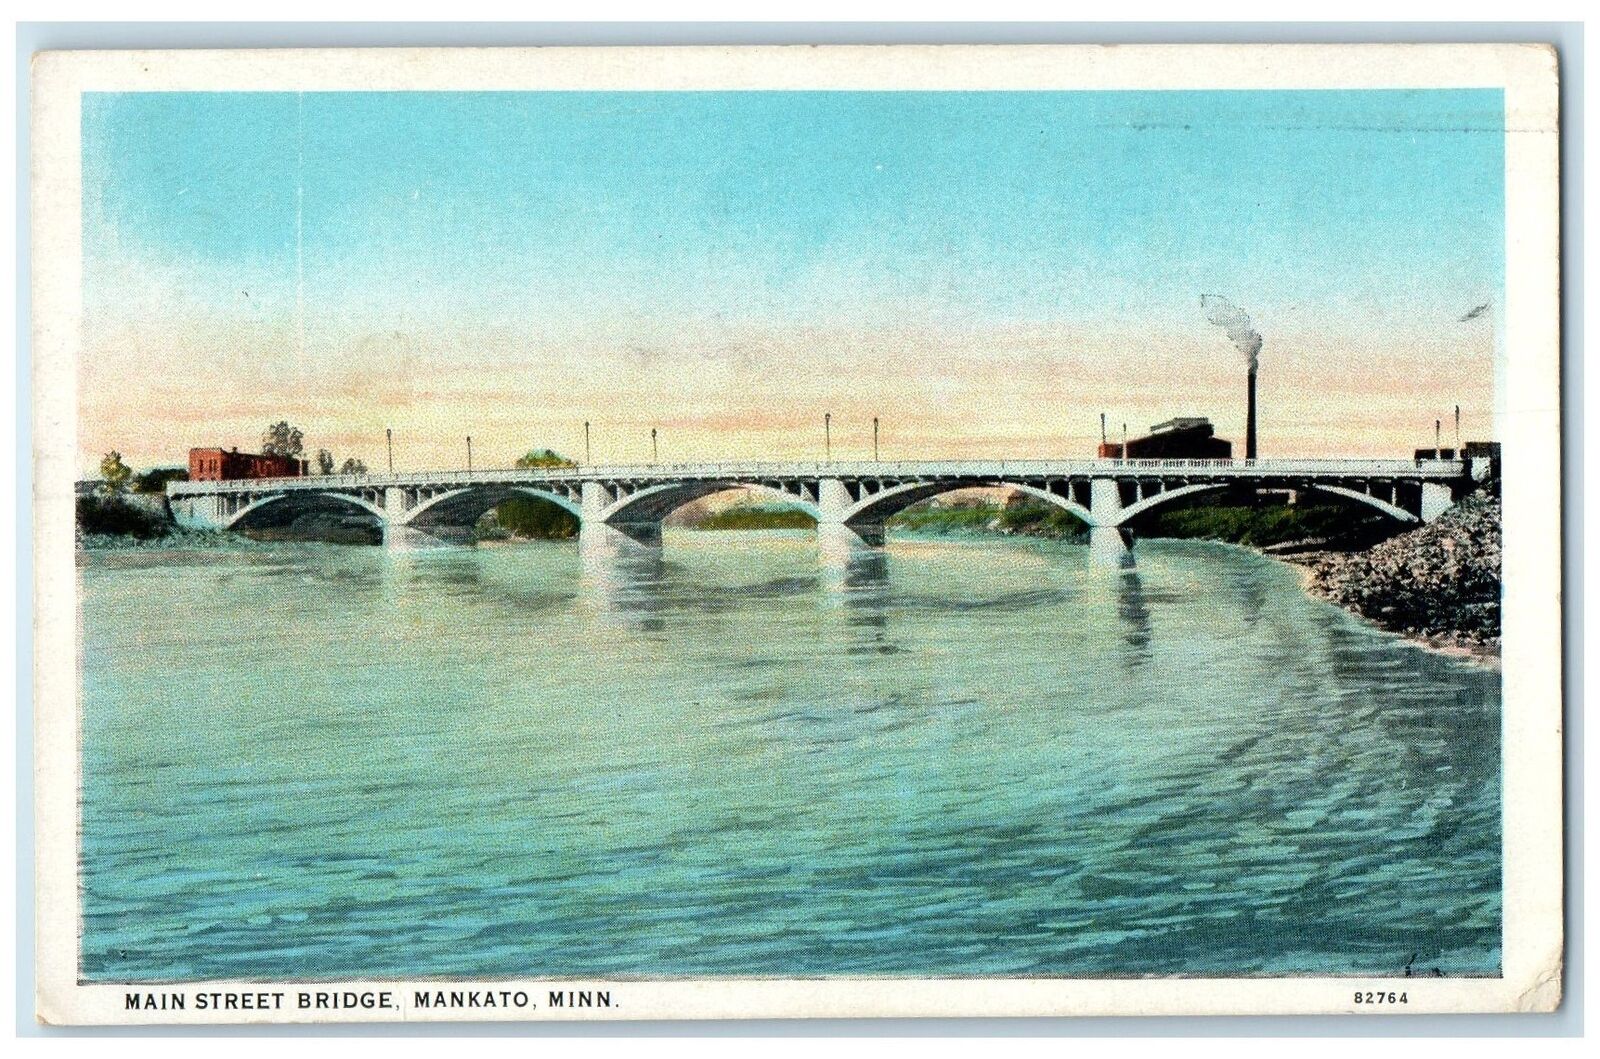 1930 Main Street Bridge River Building View Mankato Minnesota Vintage Postcard